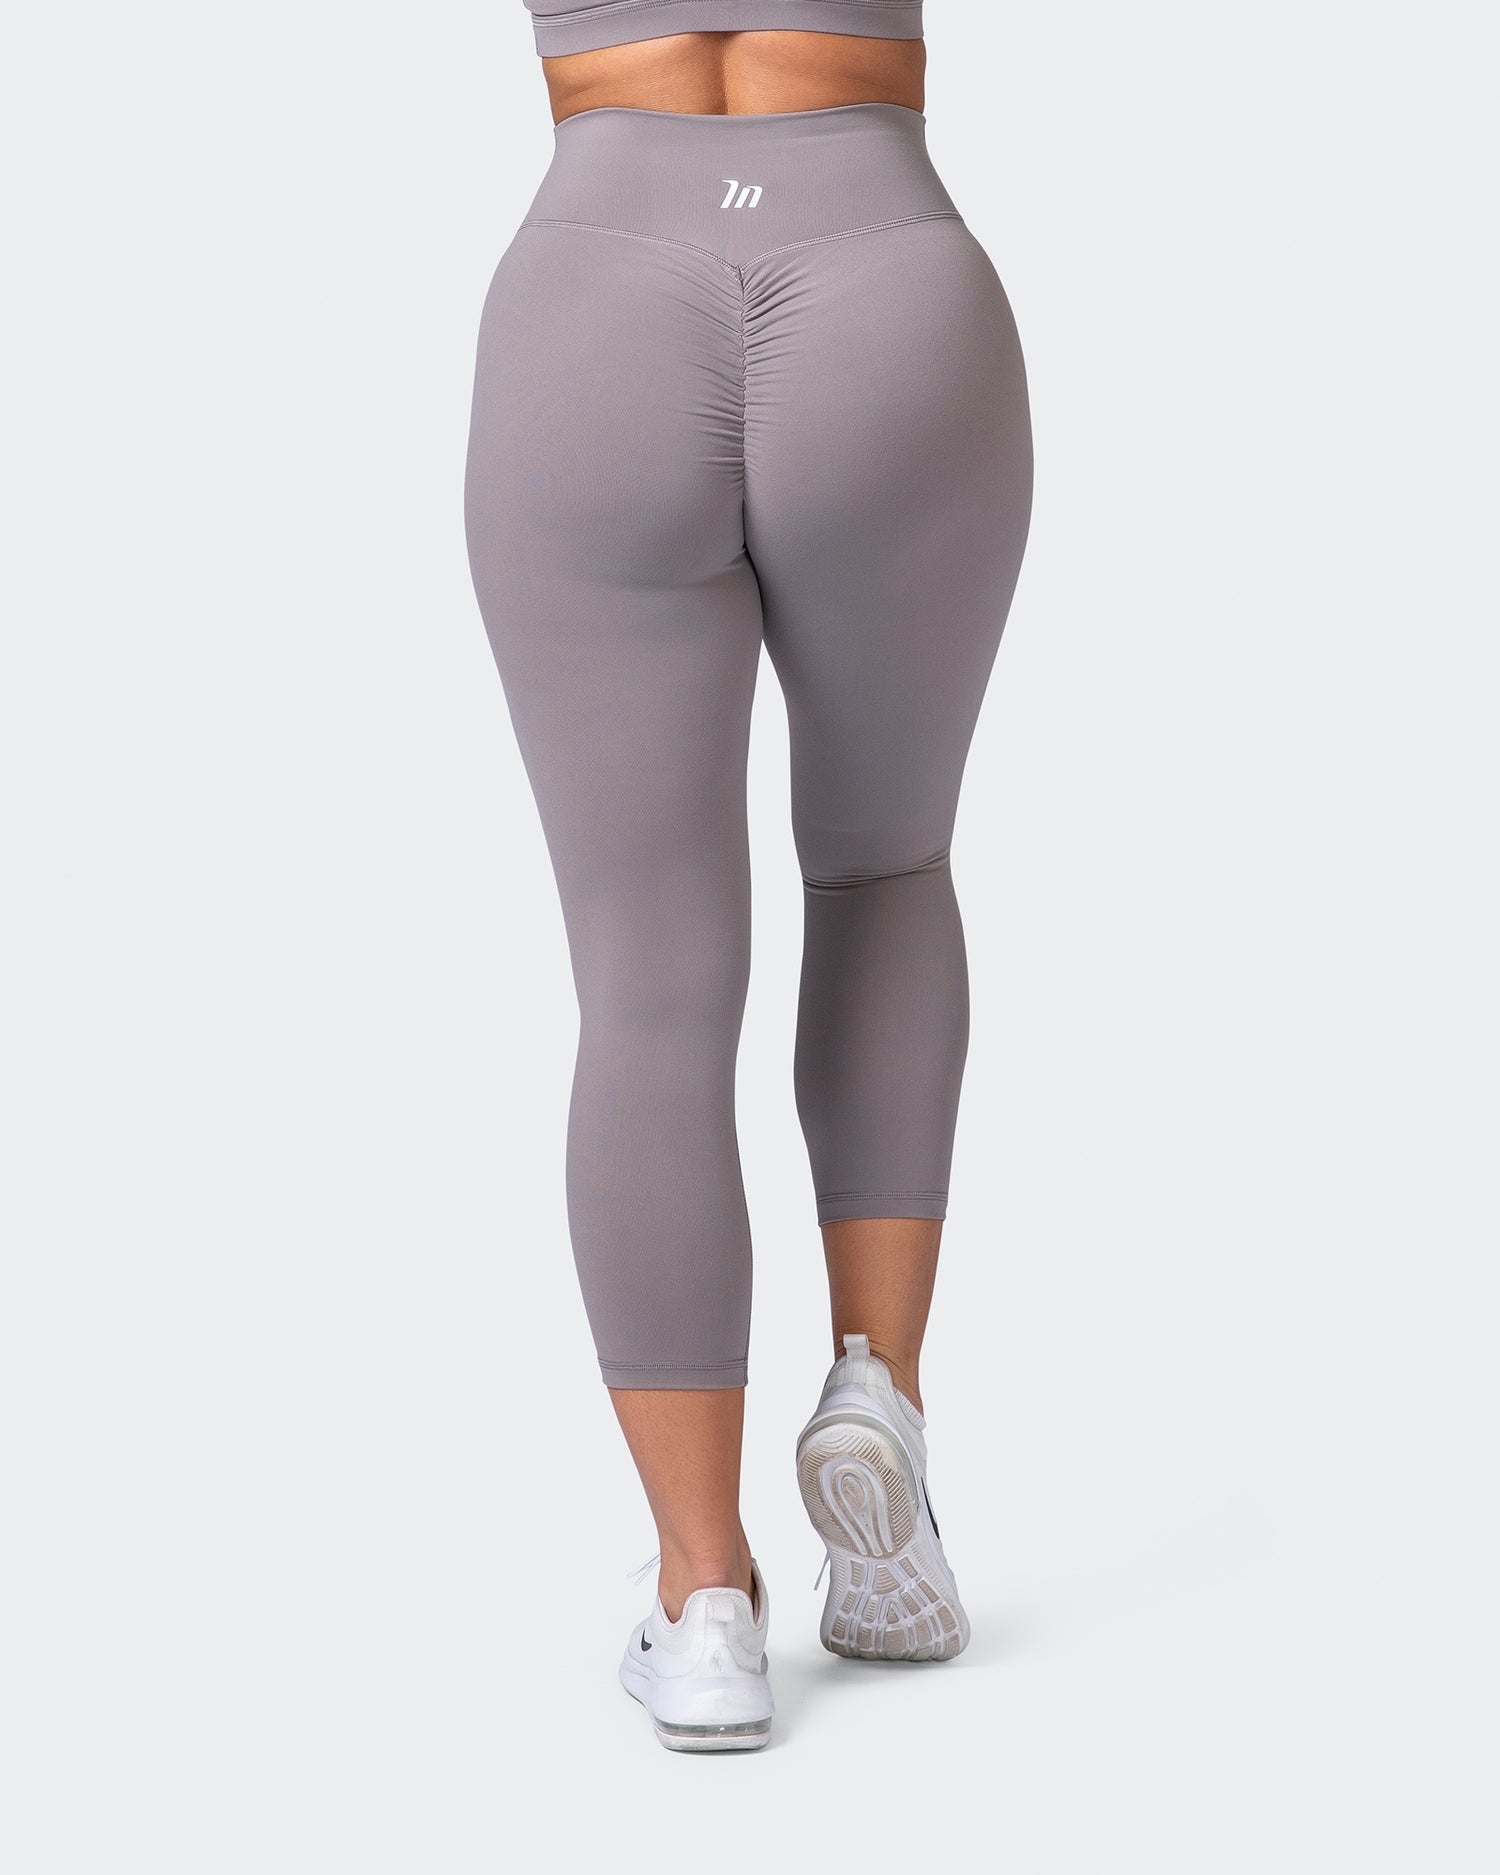 Missy Empire Missyempire sport ruched bum gym leggings in grey - ShopStyle